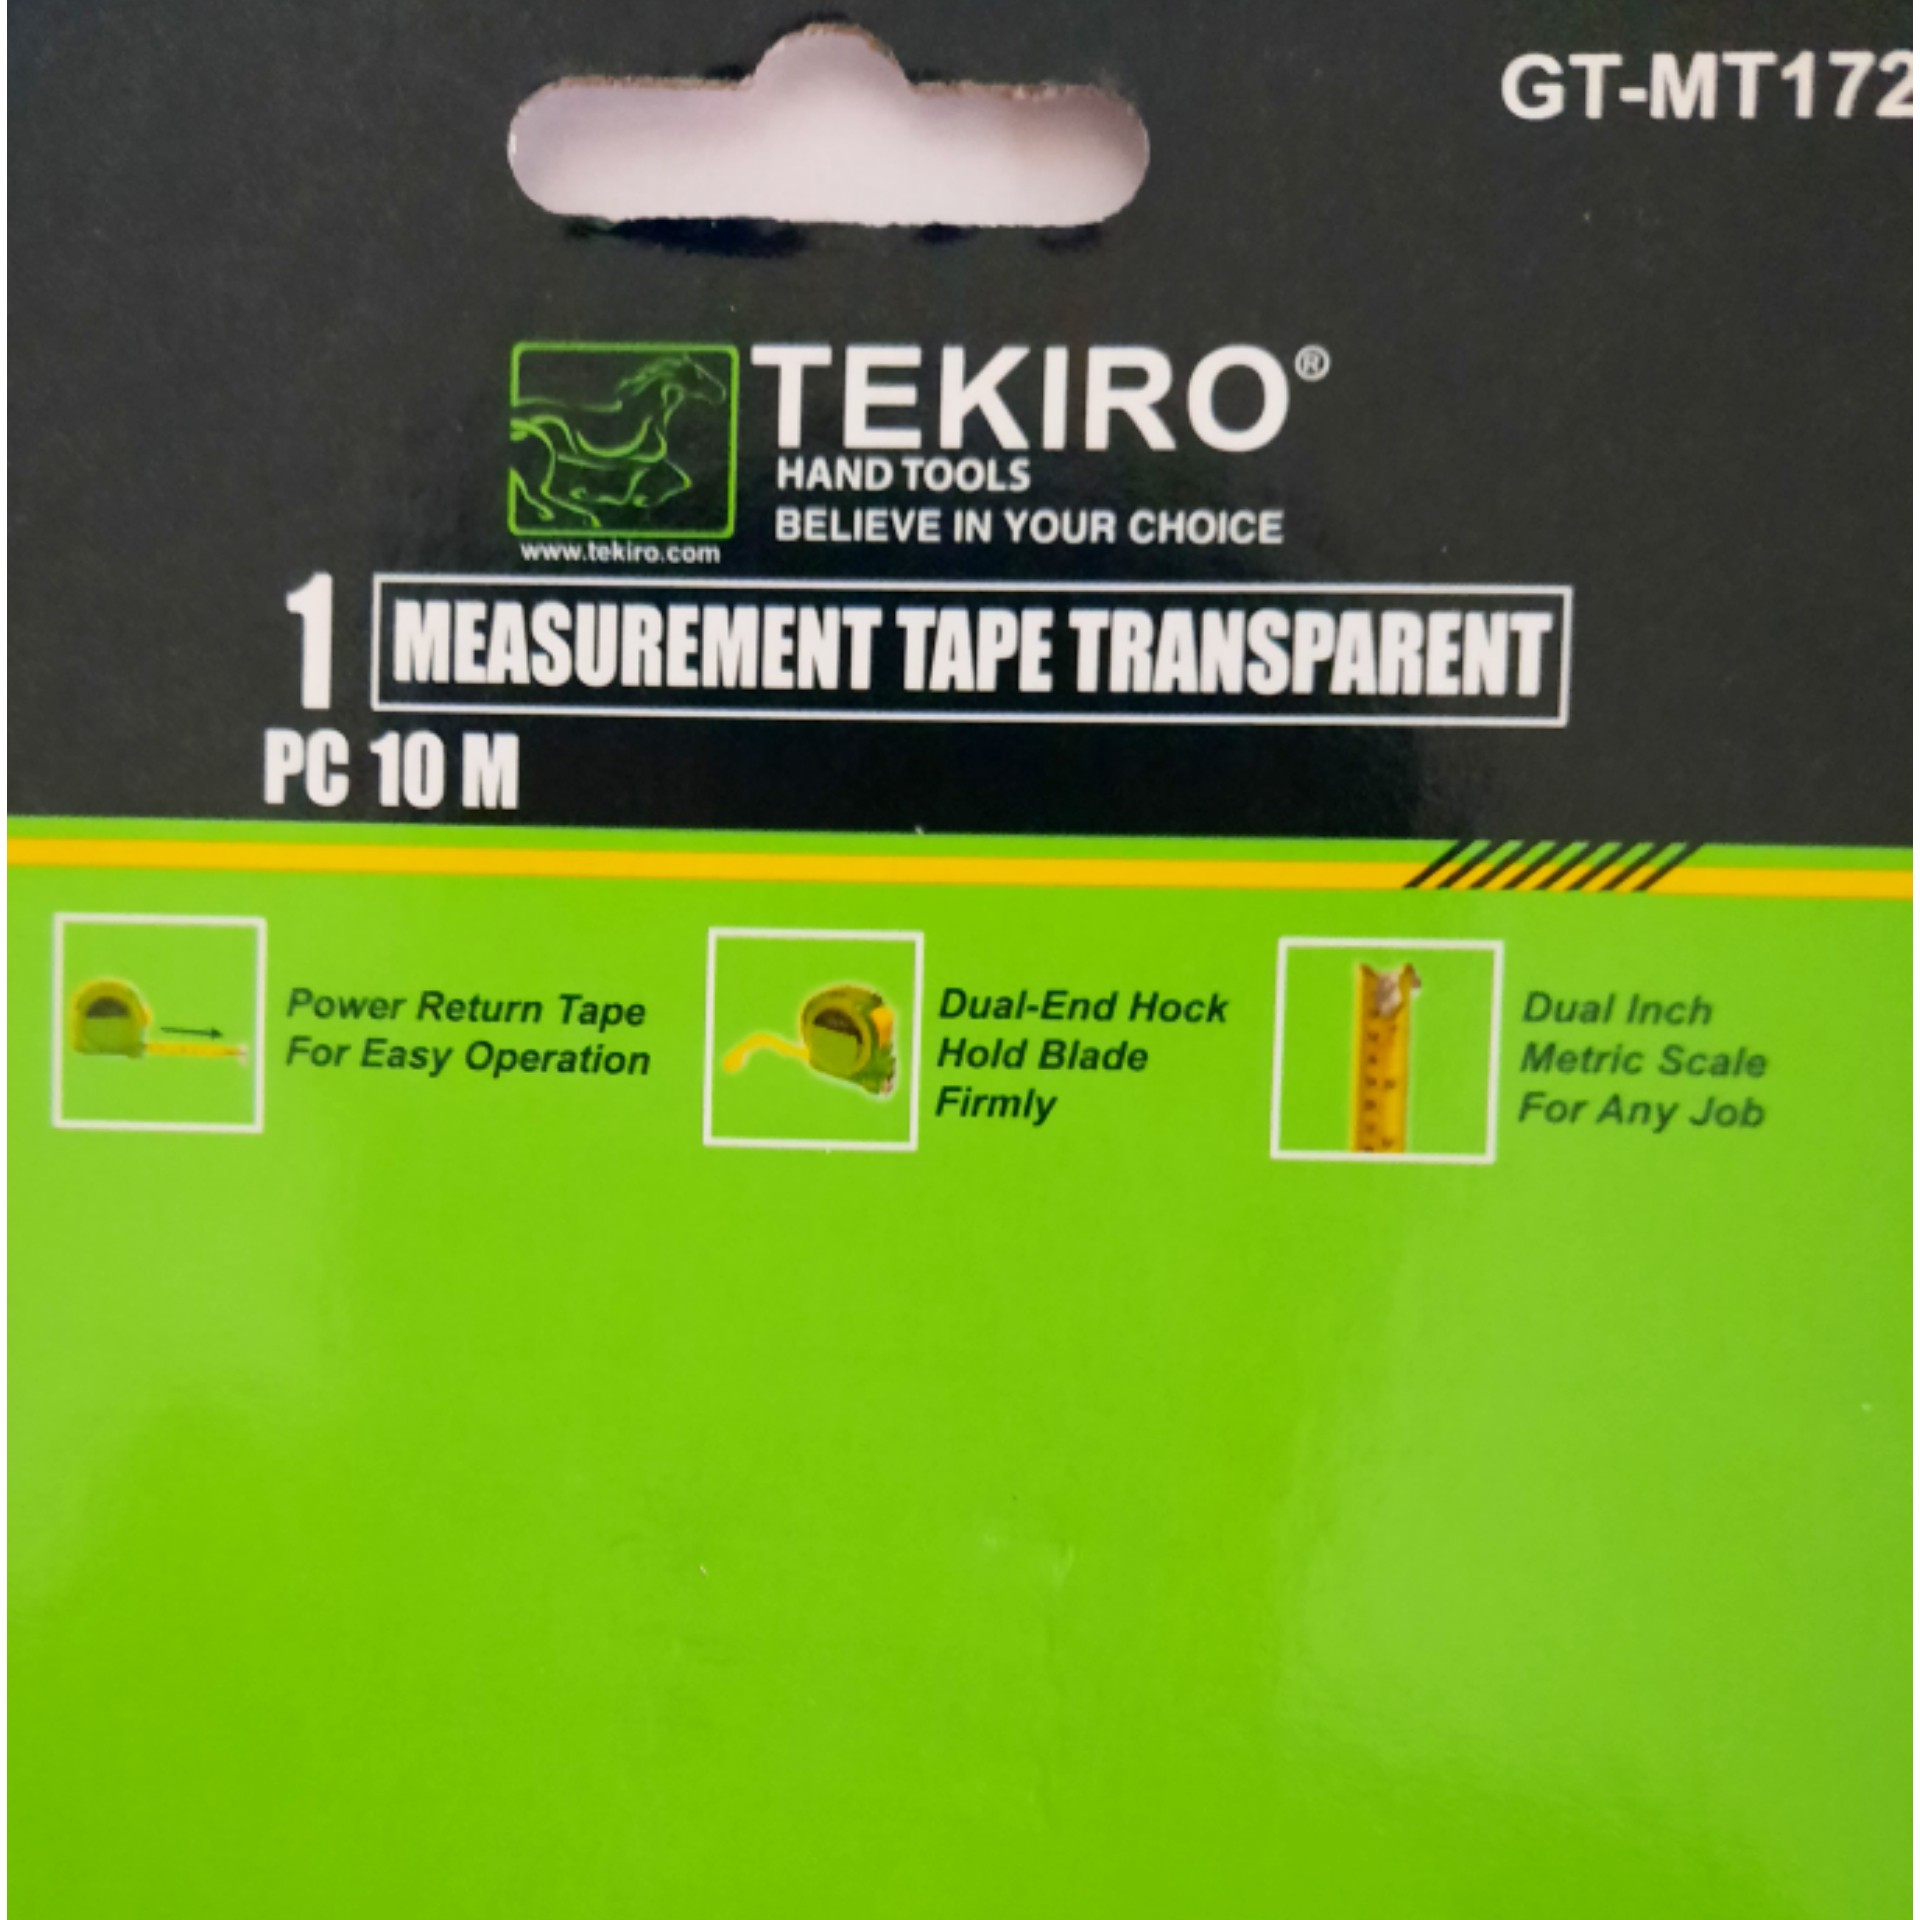 Roll Meter 10m Tekiro GT-MT1721 4